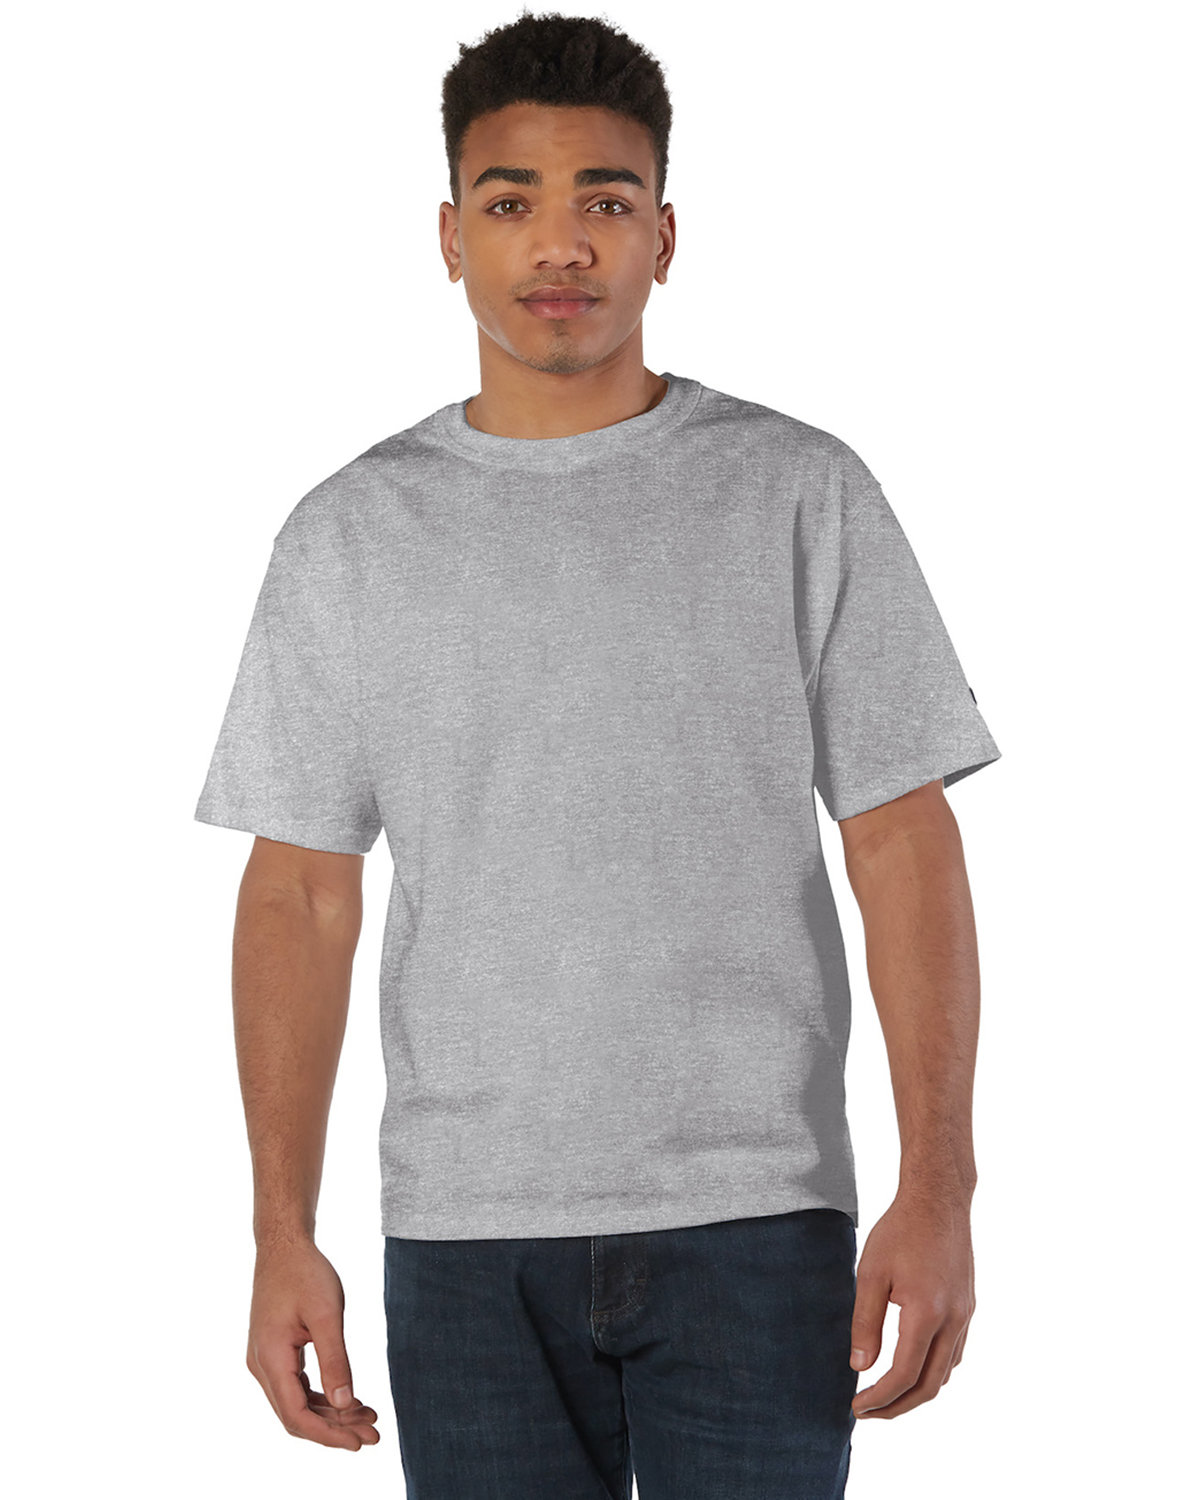 Champion 7 oz., Adult Heritage Jersey T-Shirt oxford gray 